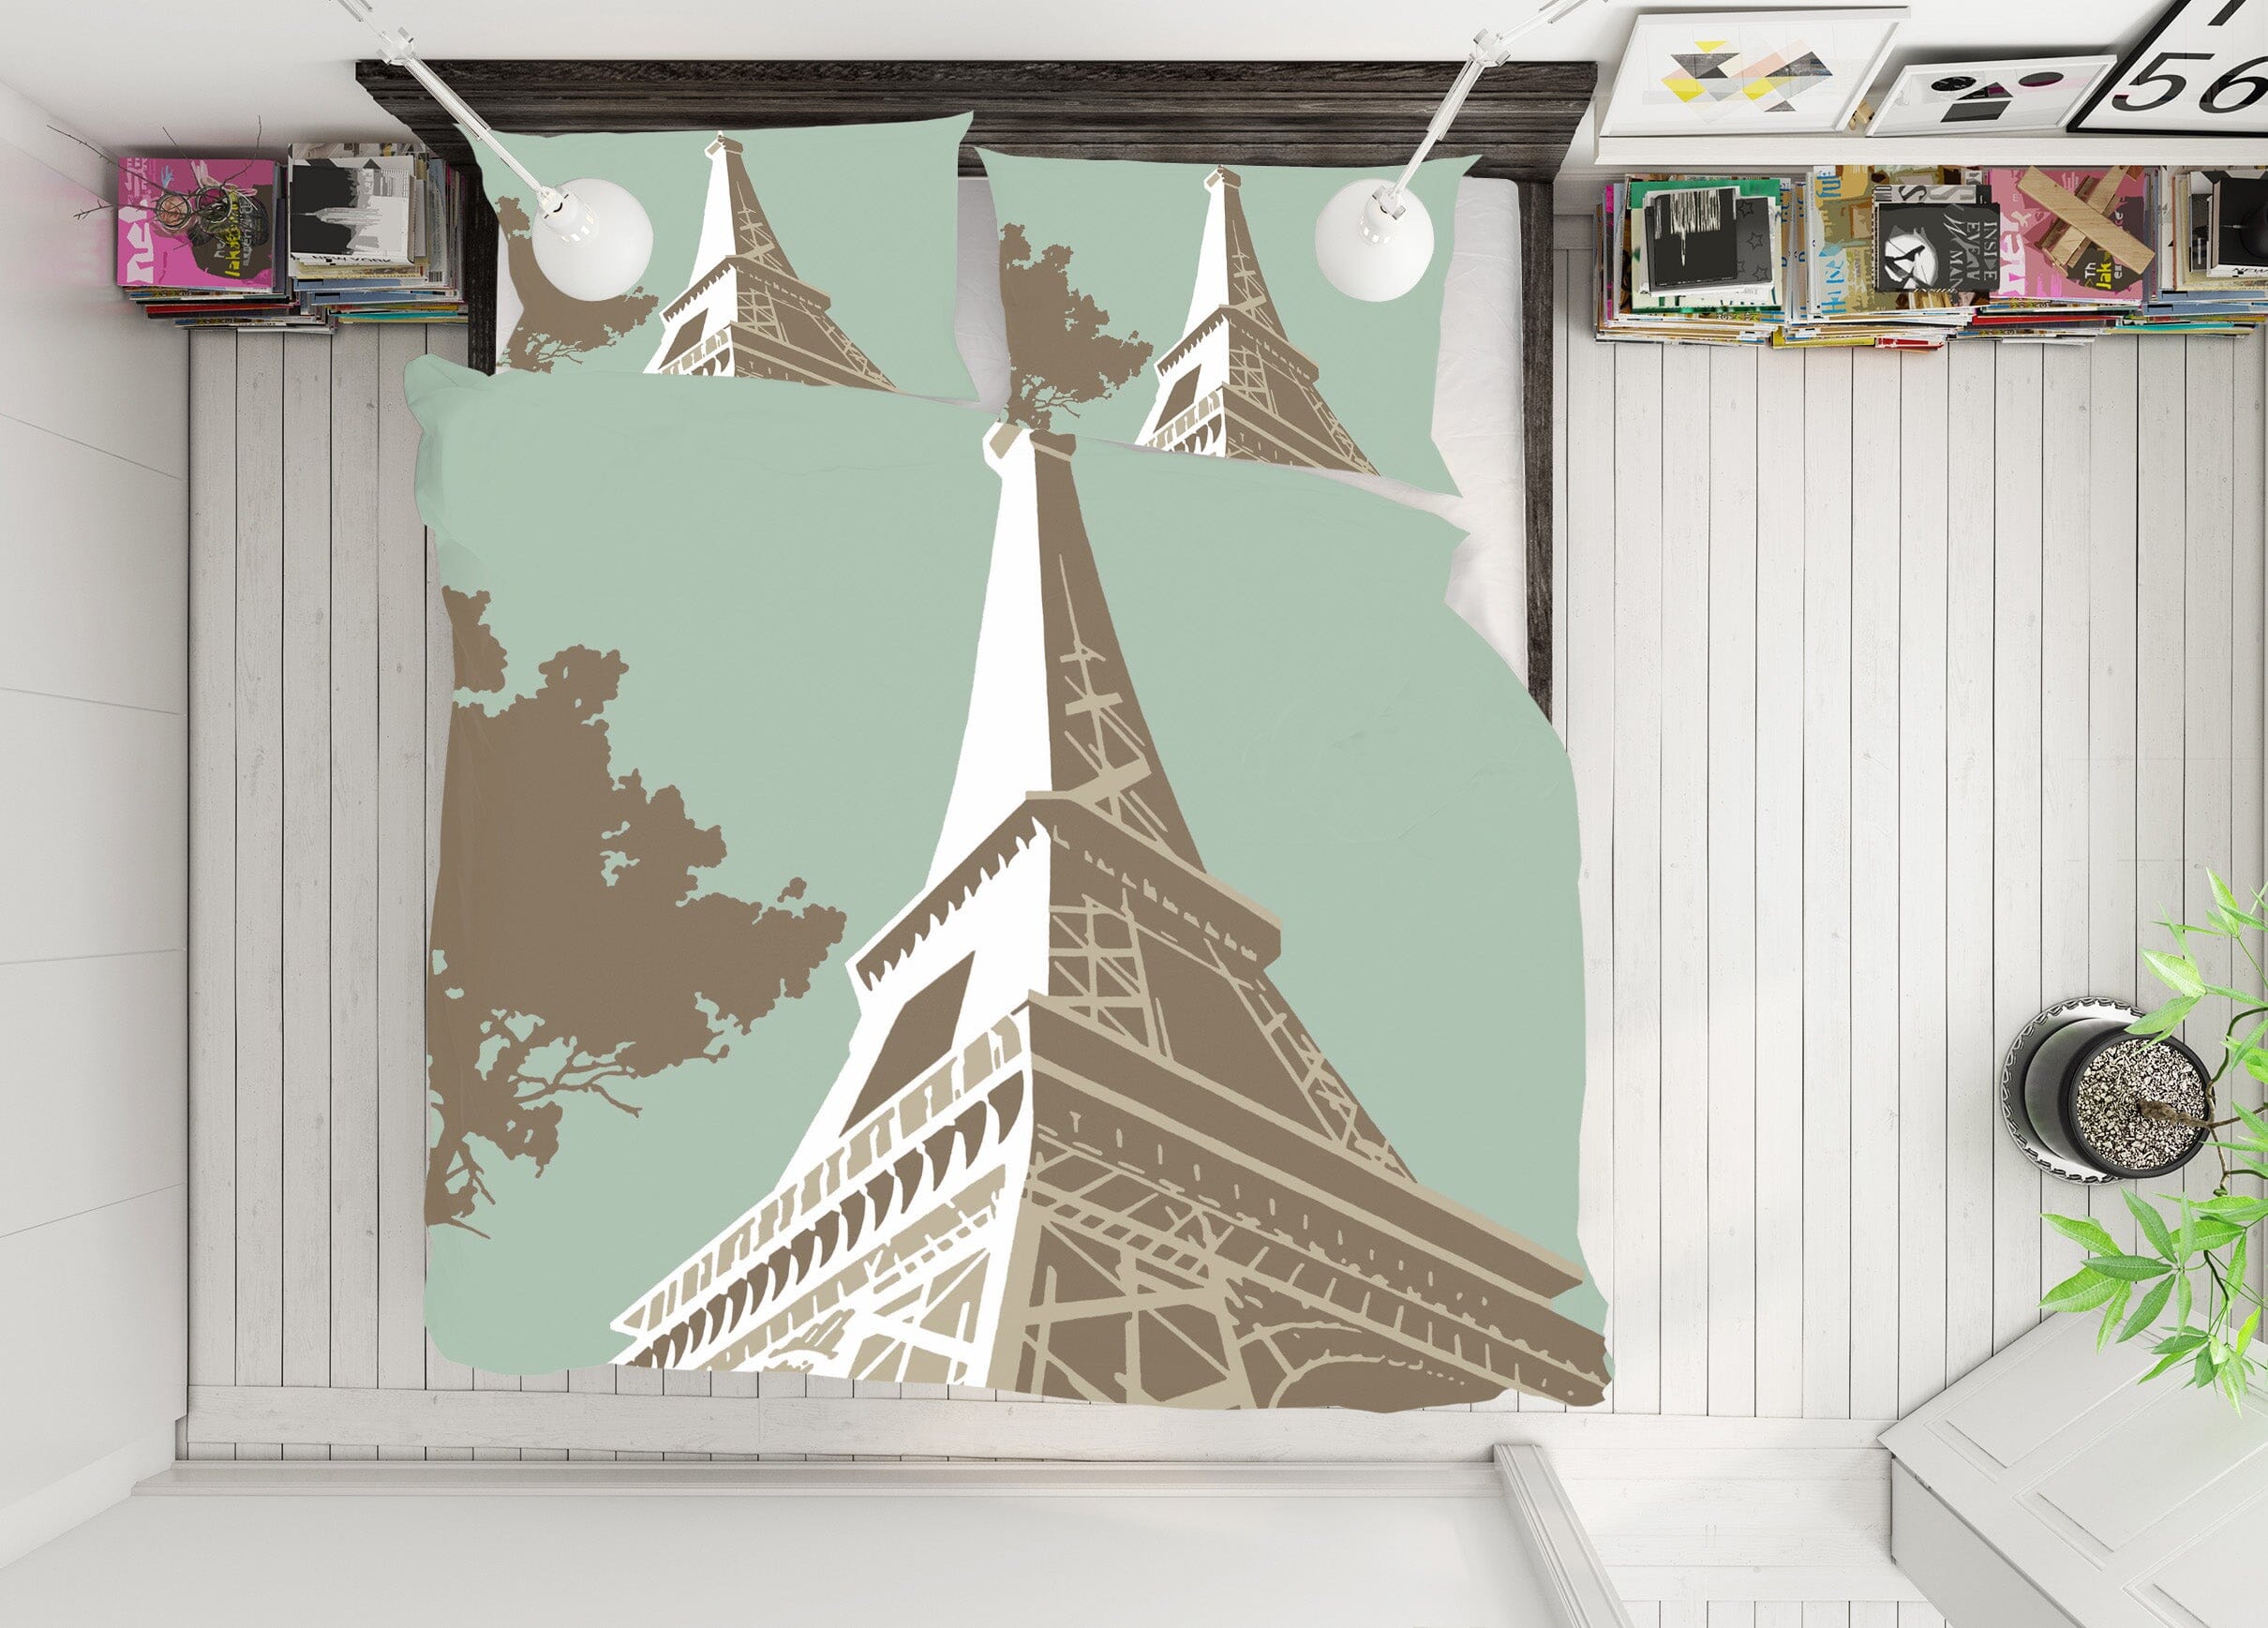 3D Eiffel Tower 2018 Steve Read Bedding Bed Pillowcases Quilt Quiet Covers AJ Creativity Home 